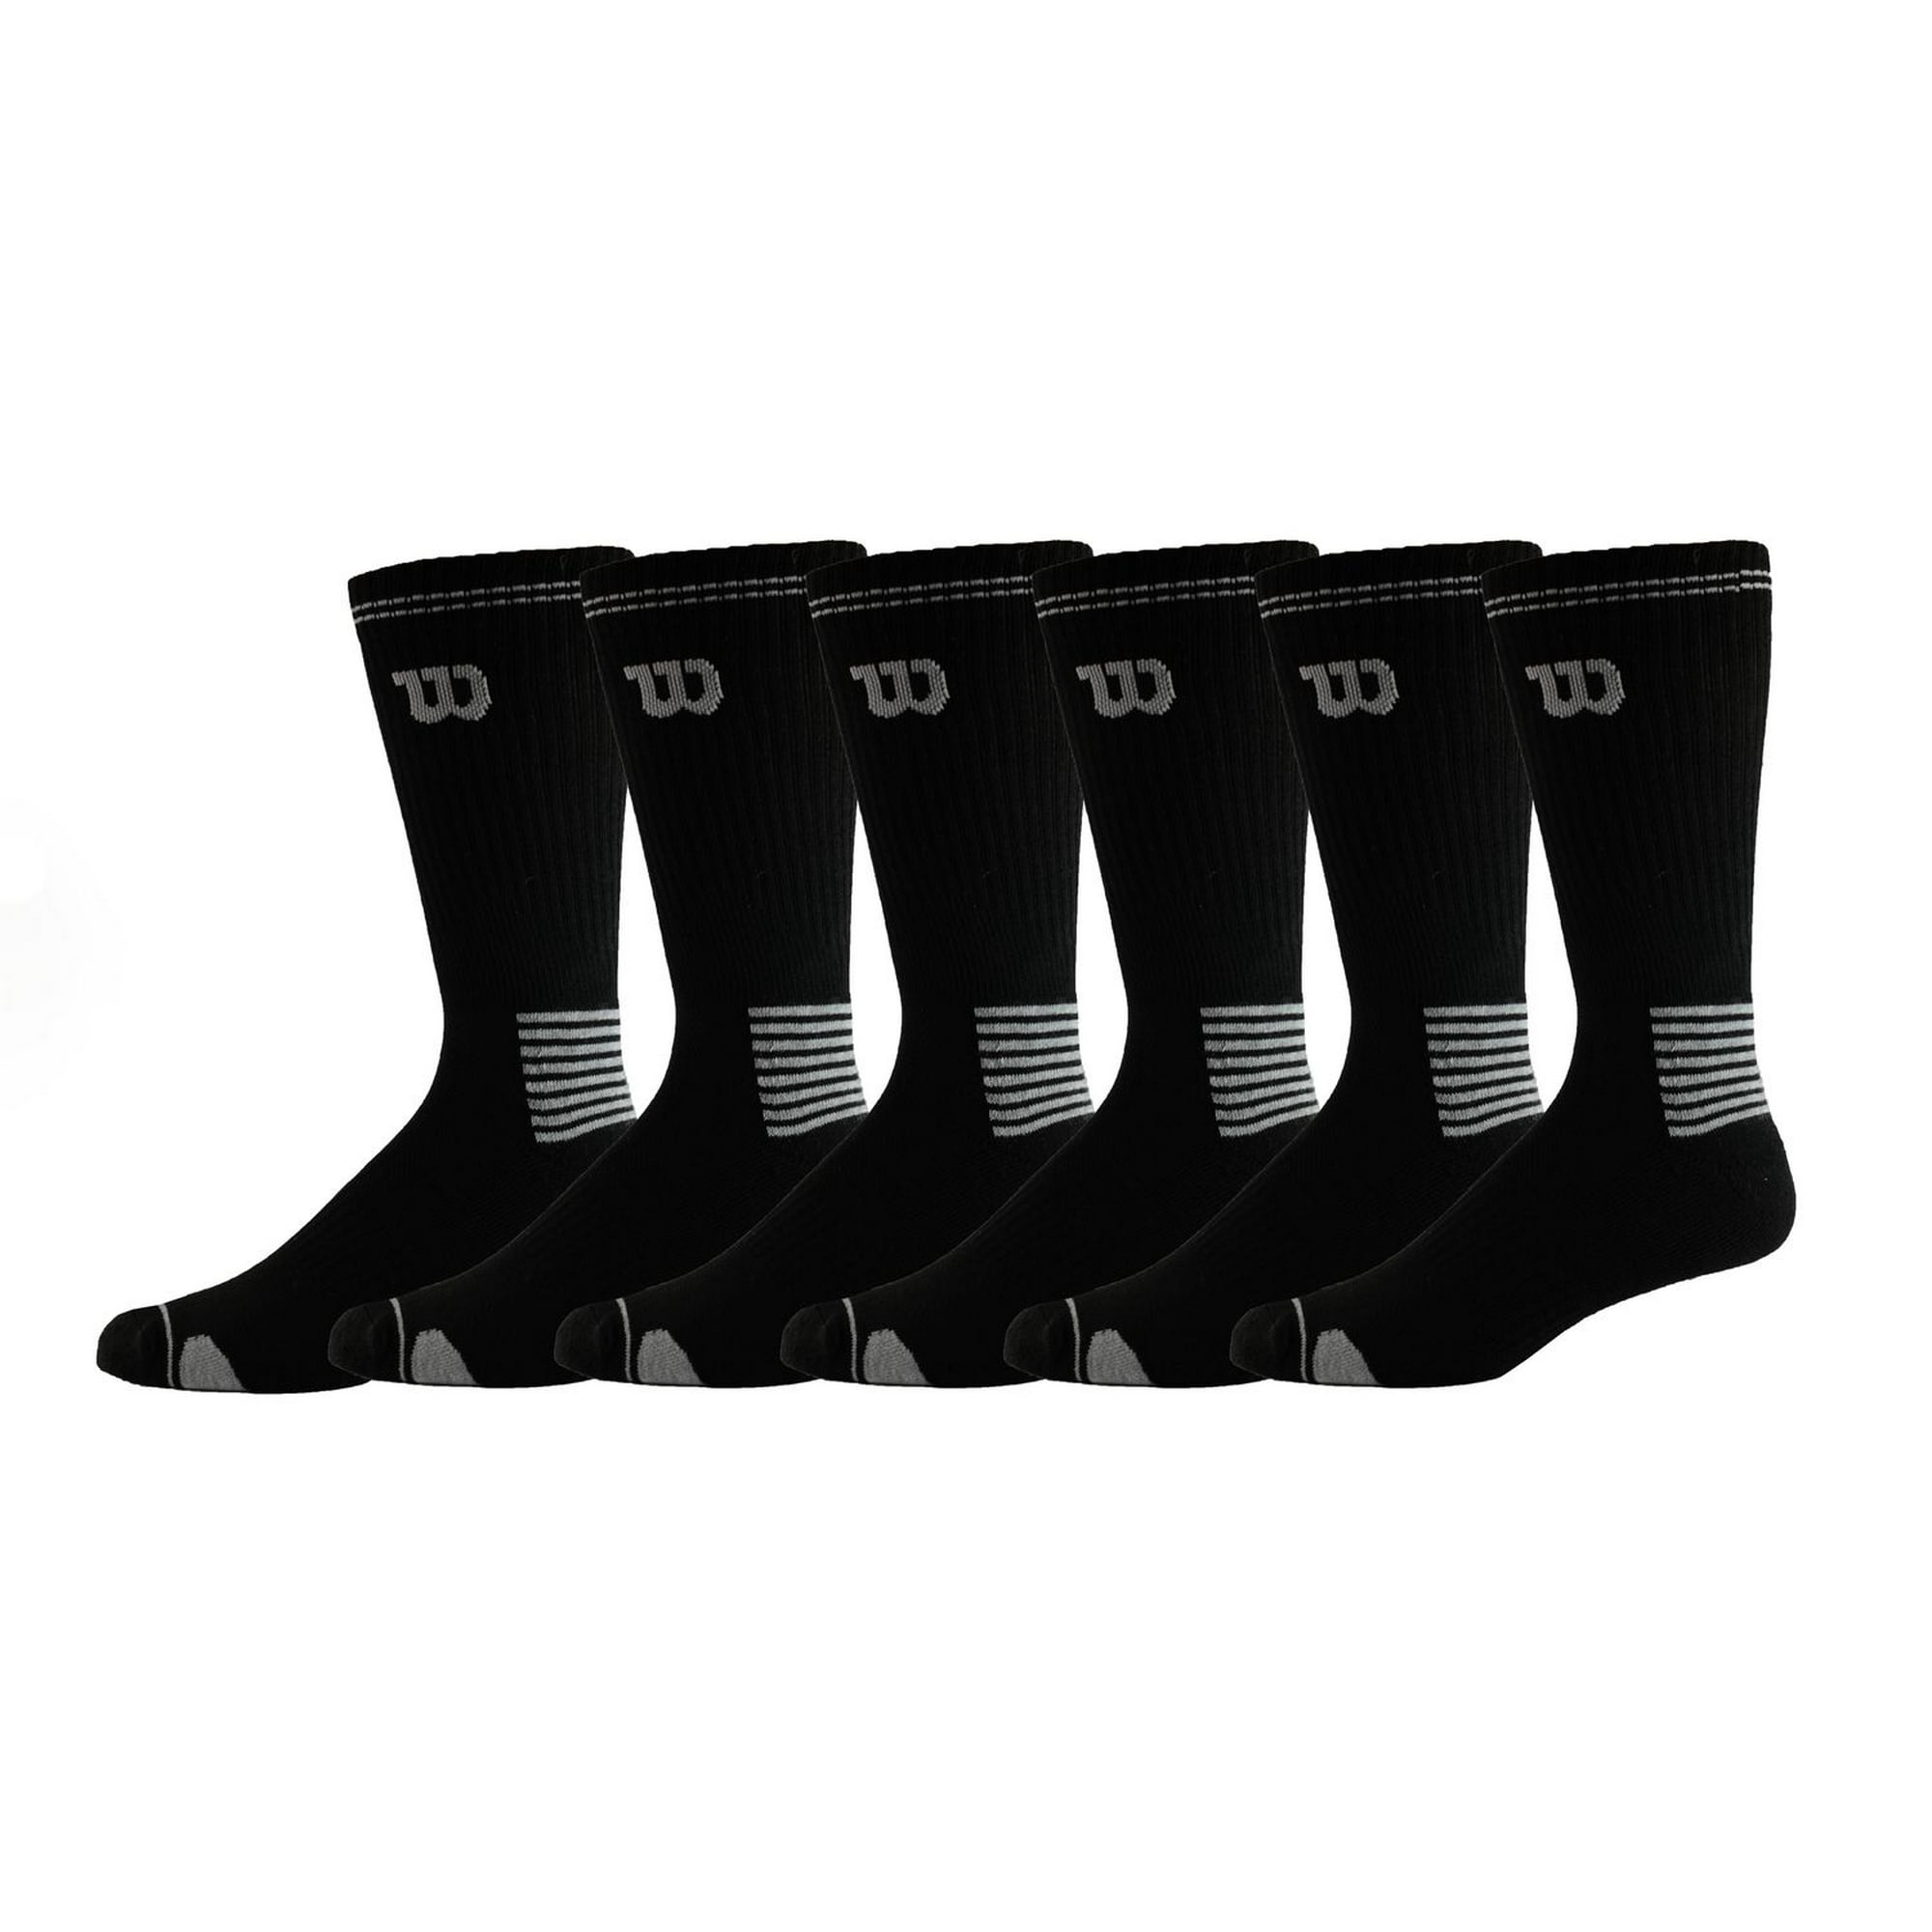 Wilson - Sport quarter socks, 3 pairs - Black. Colour: black. Size